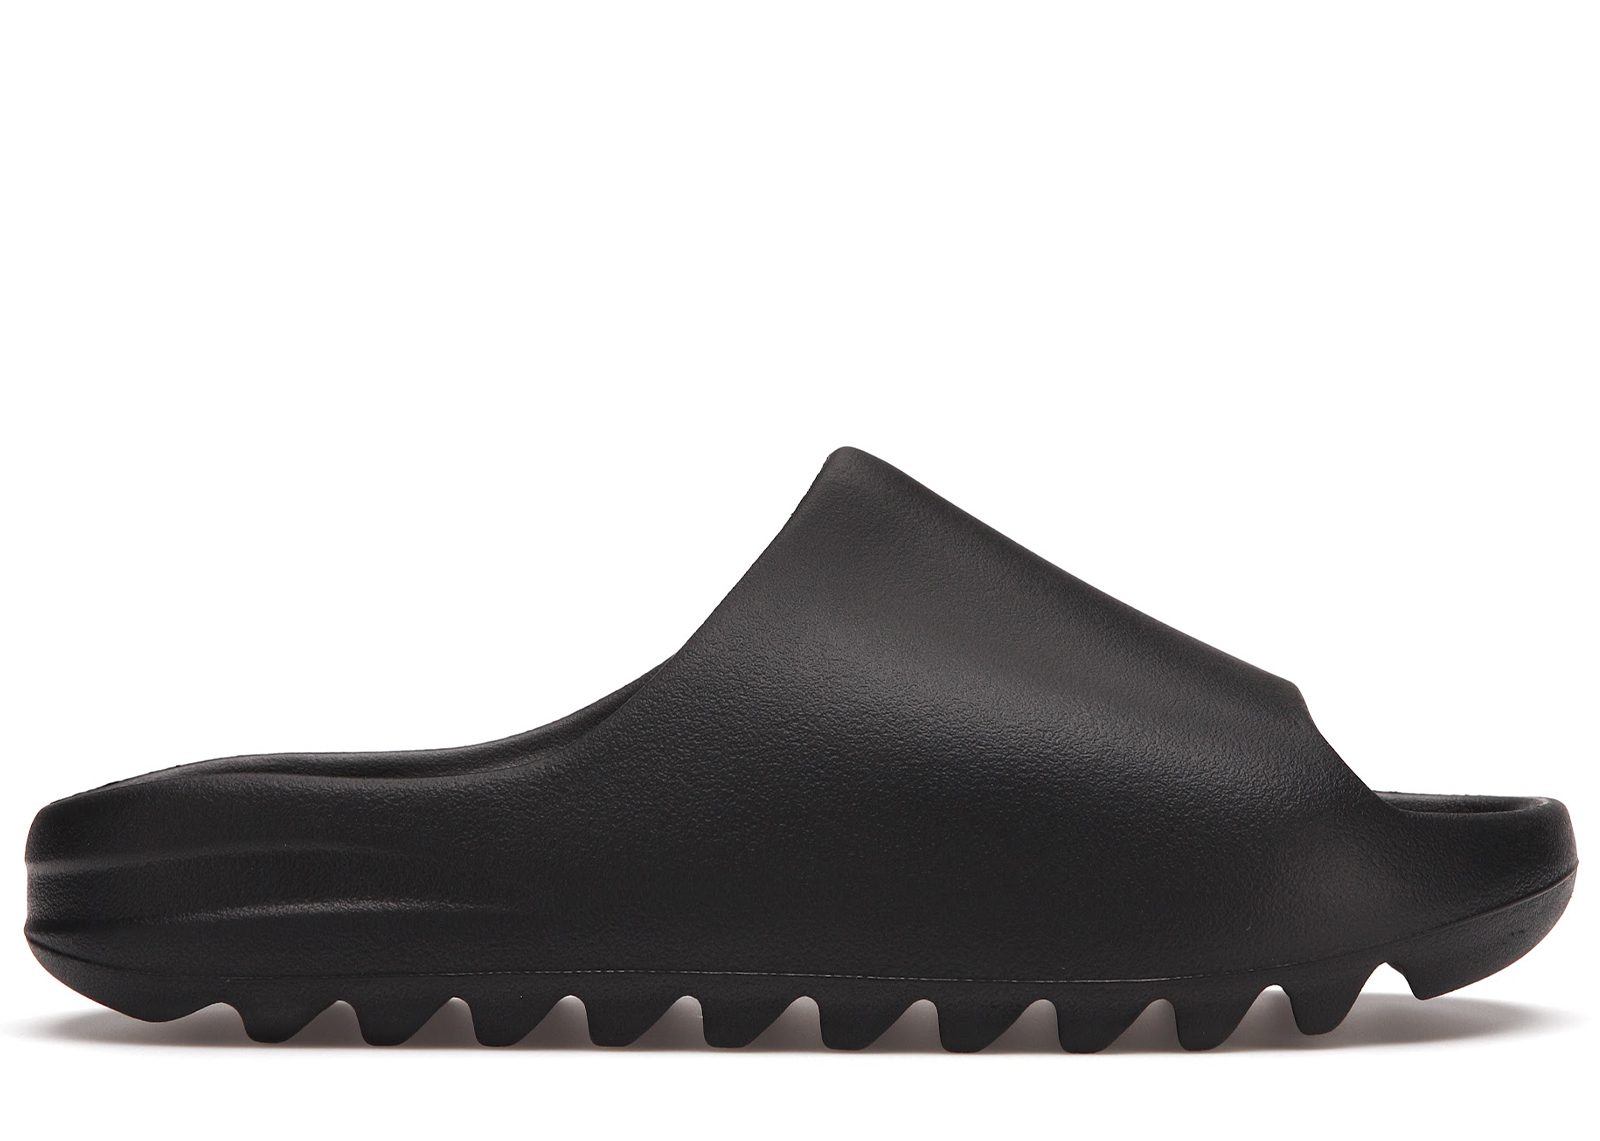 【adidas】YEEZY SLIDE PURE26.5cm サンダル 靴 メンズ 激安ビジネス